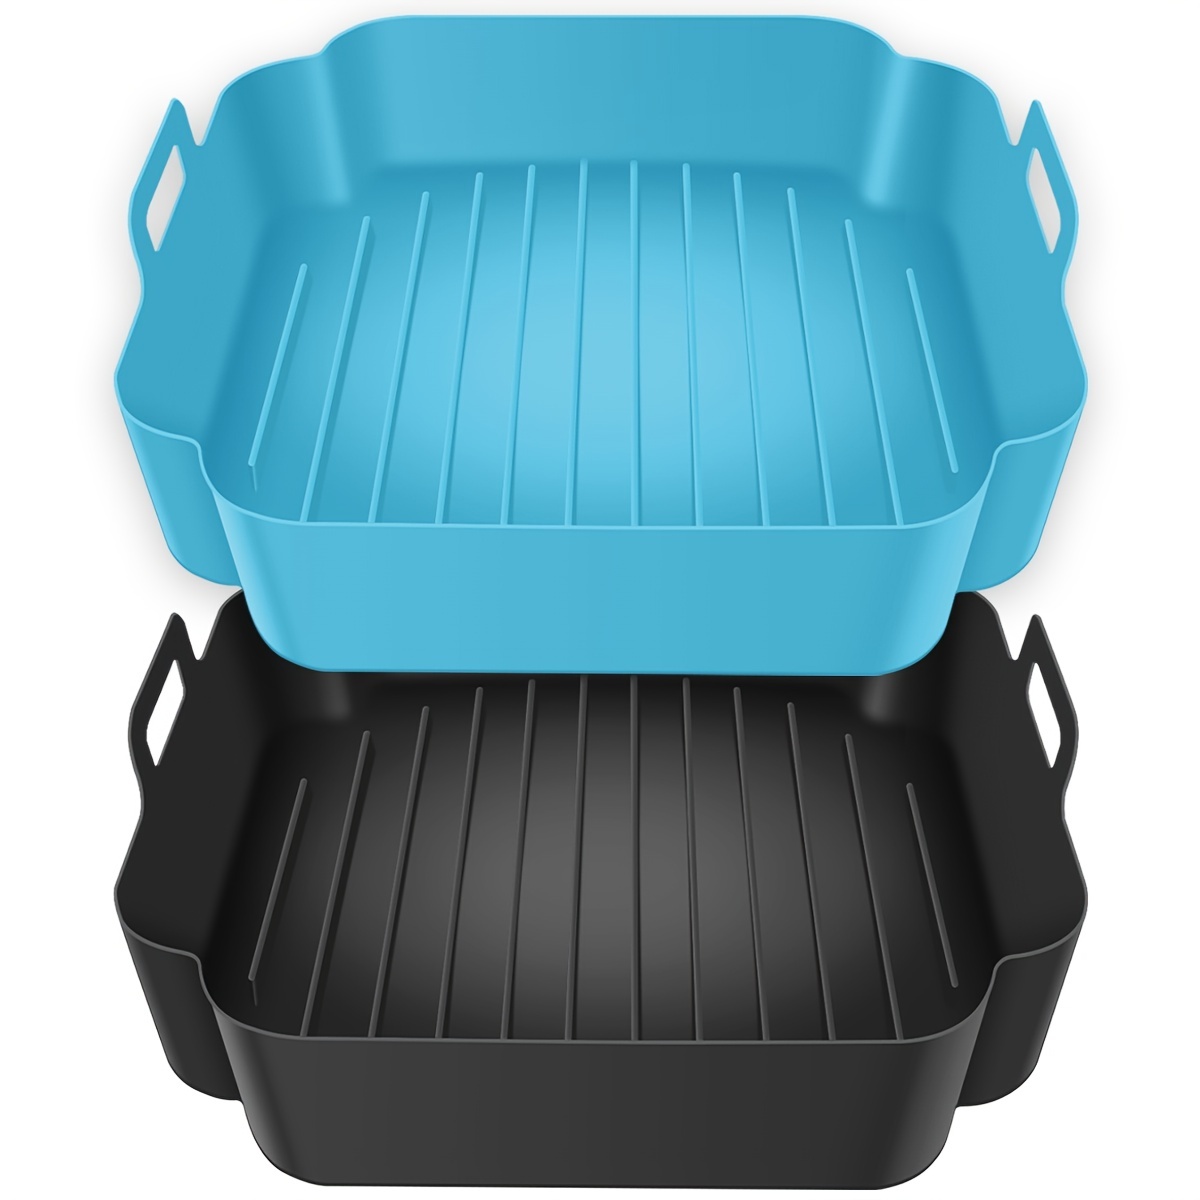 2PCS Air Fryer Silicone Tray Dish Dual 2 Basket Baking Pan Oven